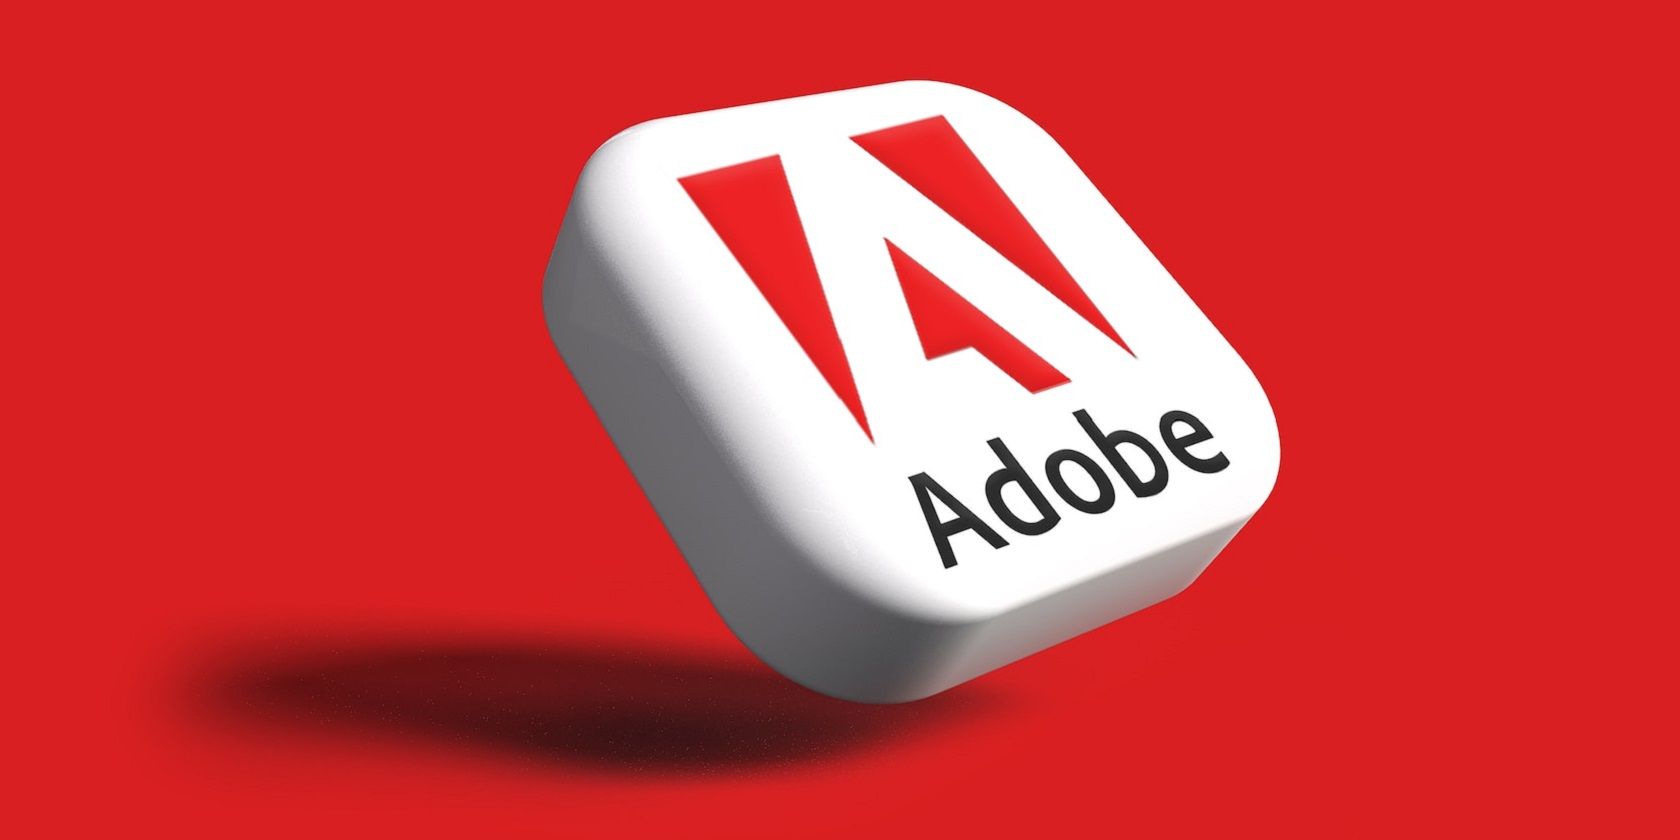 The Adobe Logo.jpg